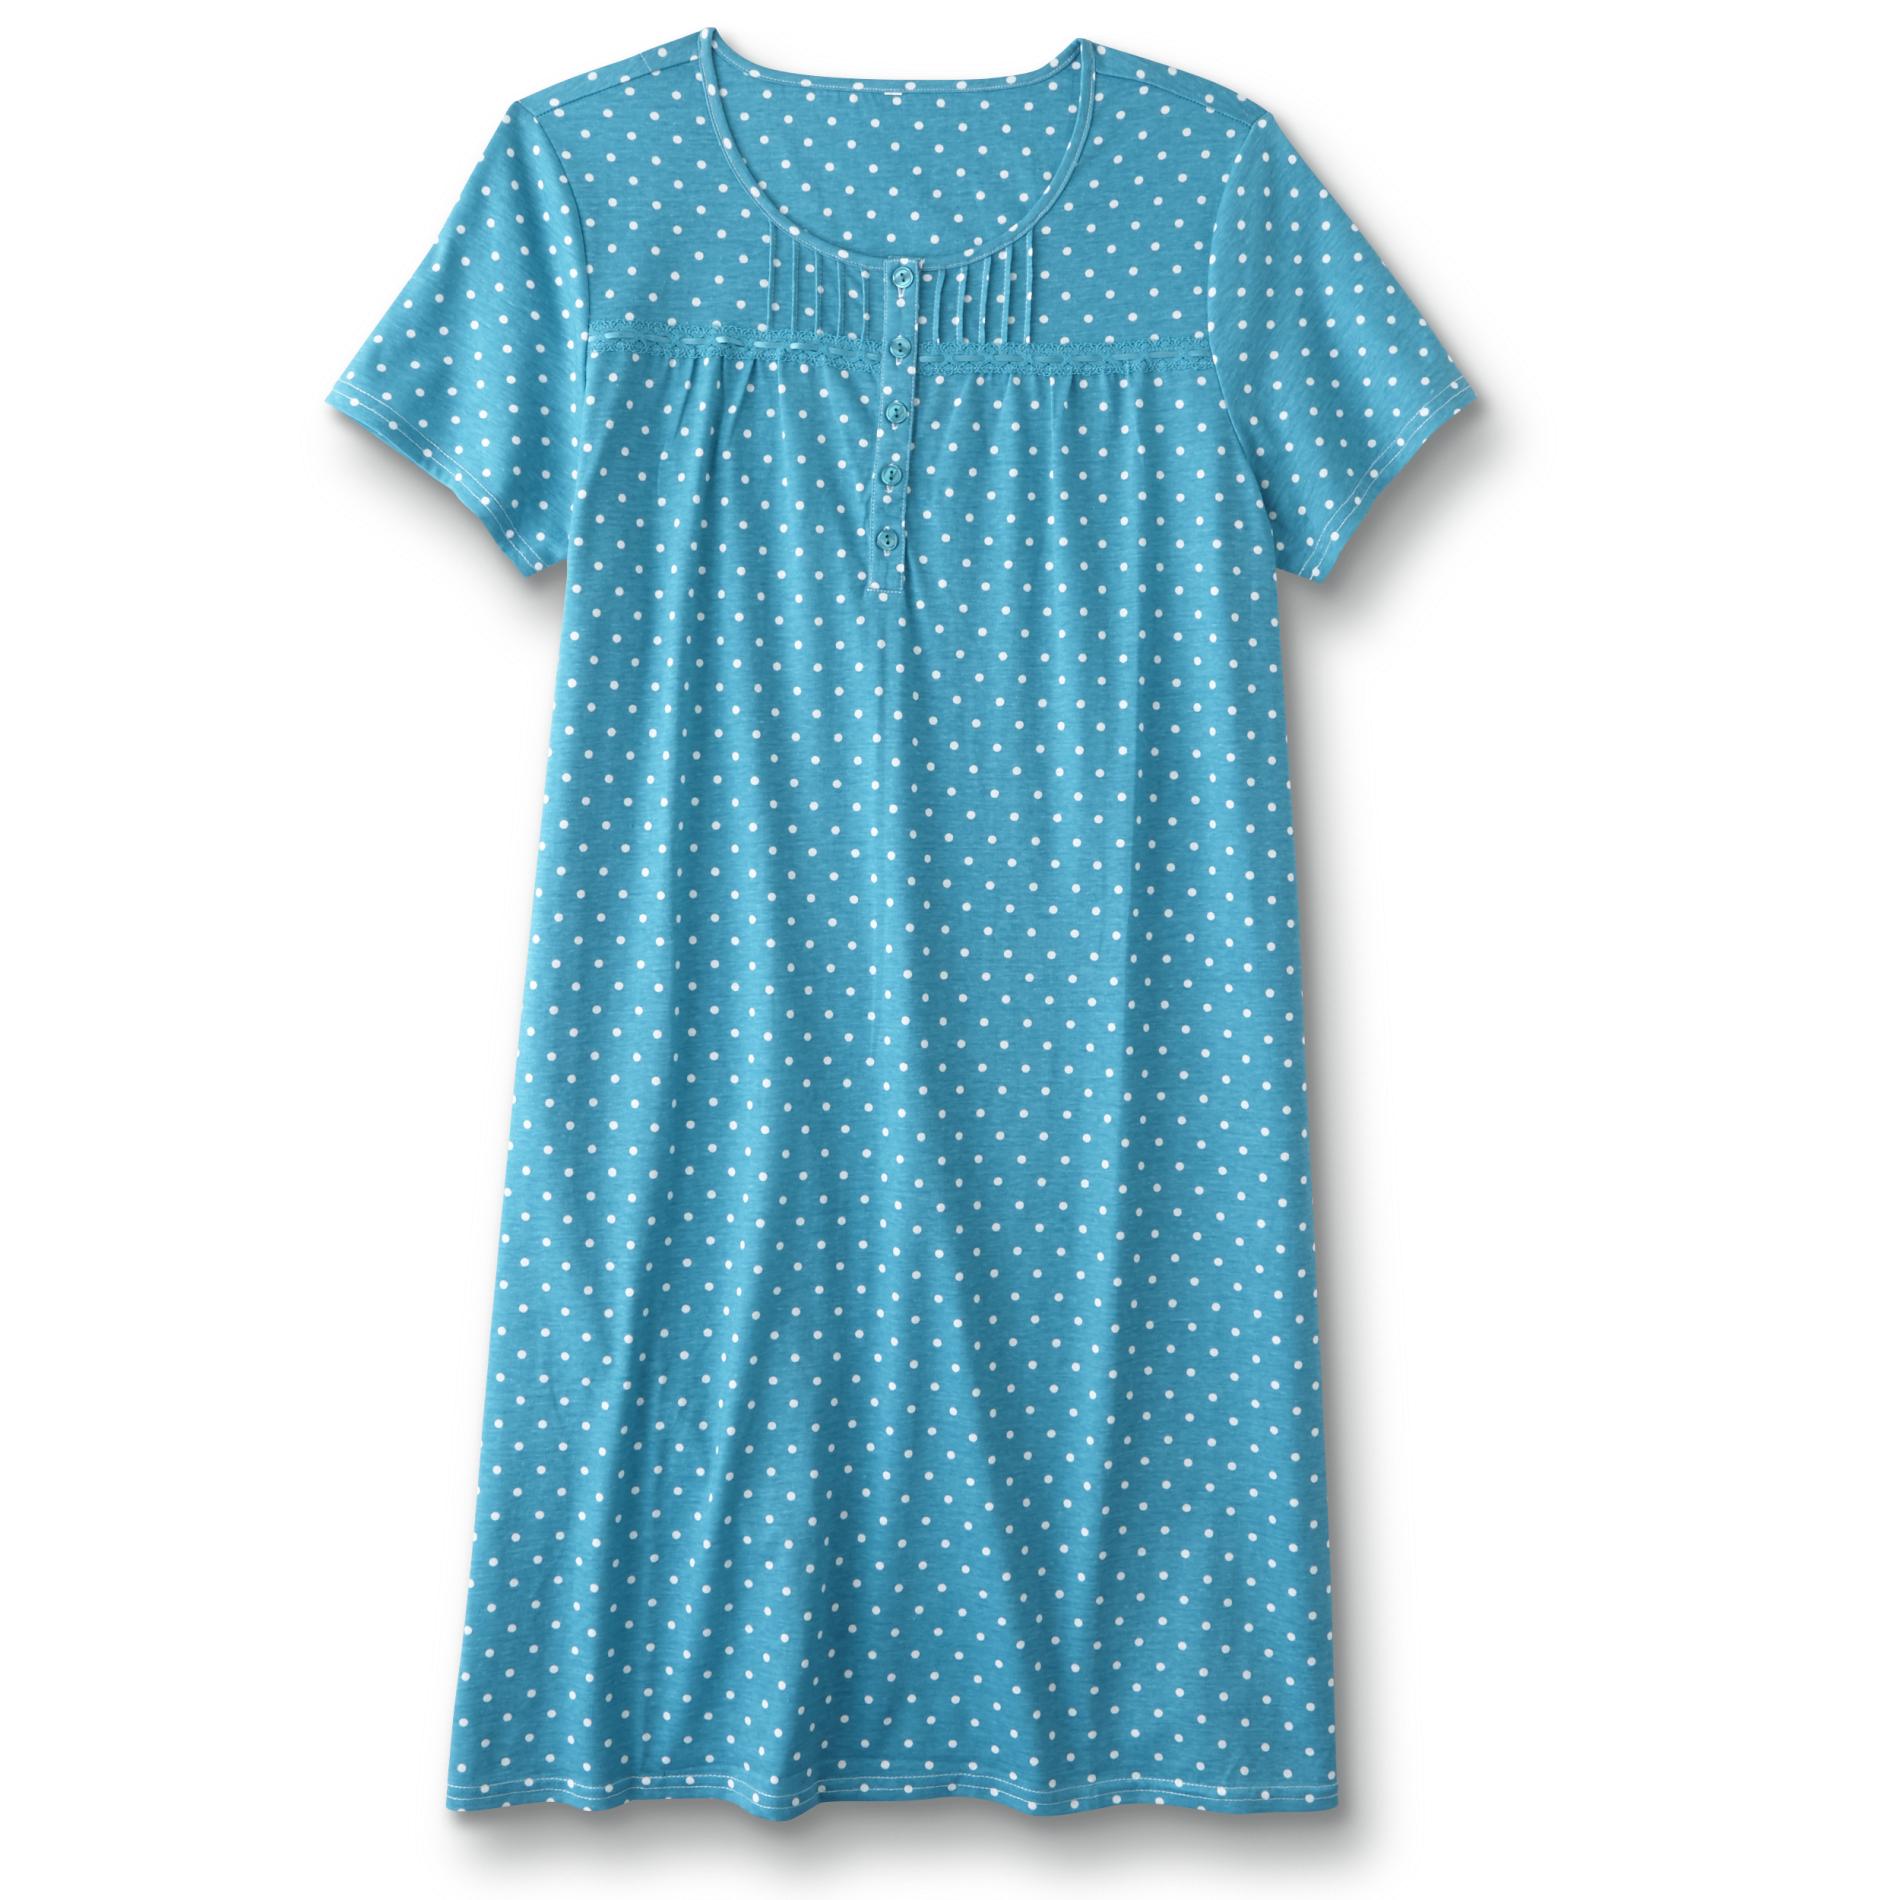 Fundamentals Women's Nightgown - Polka Dot